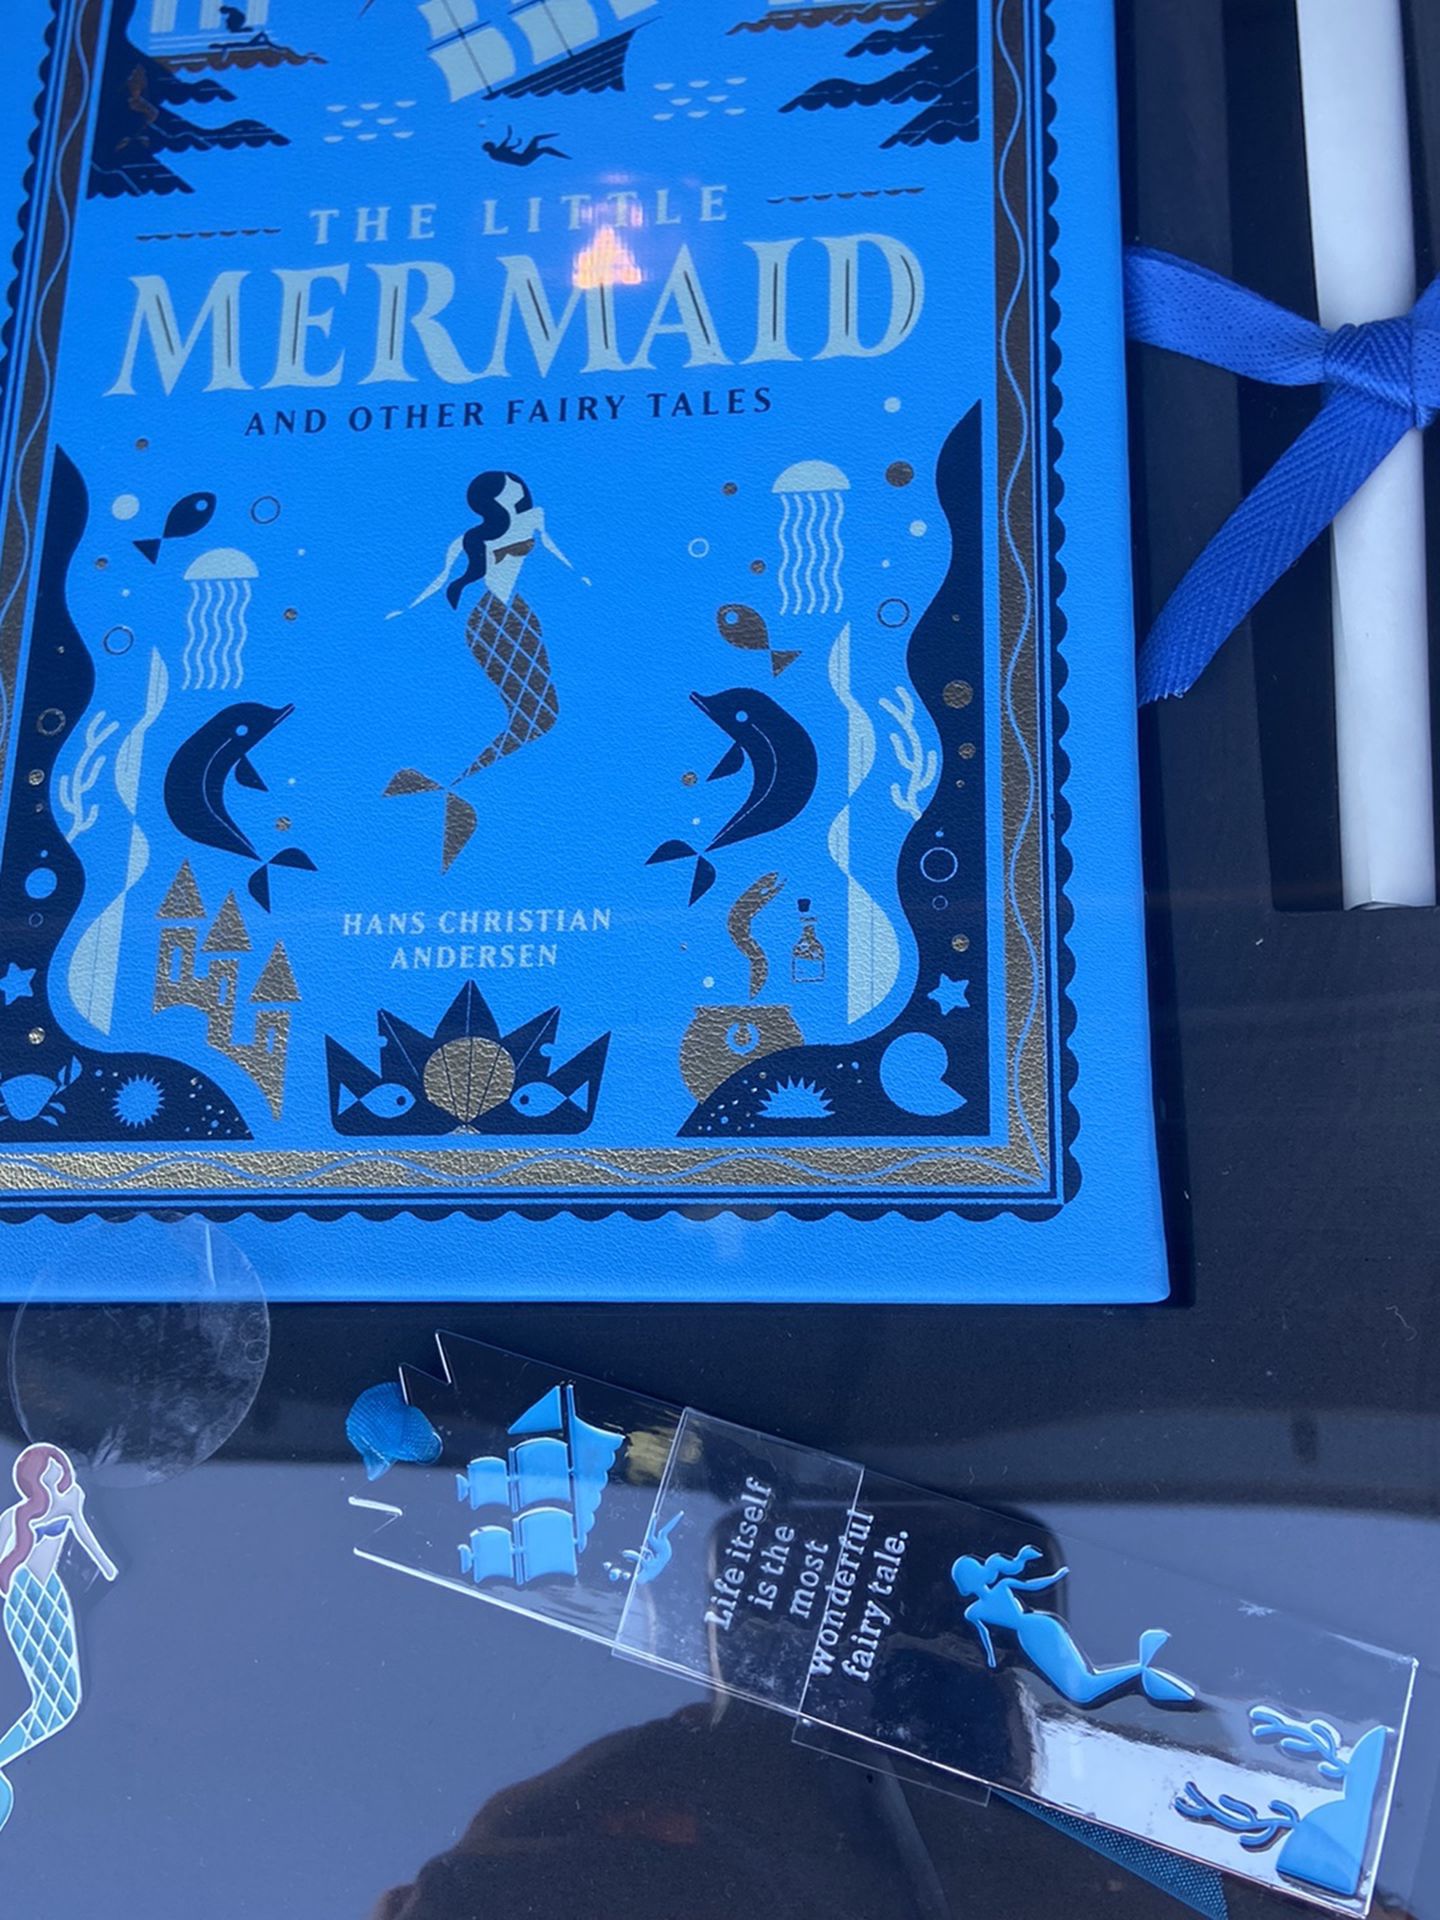 Little Mermaid book